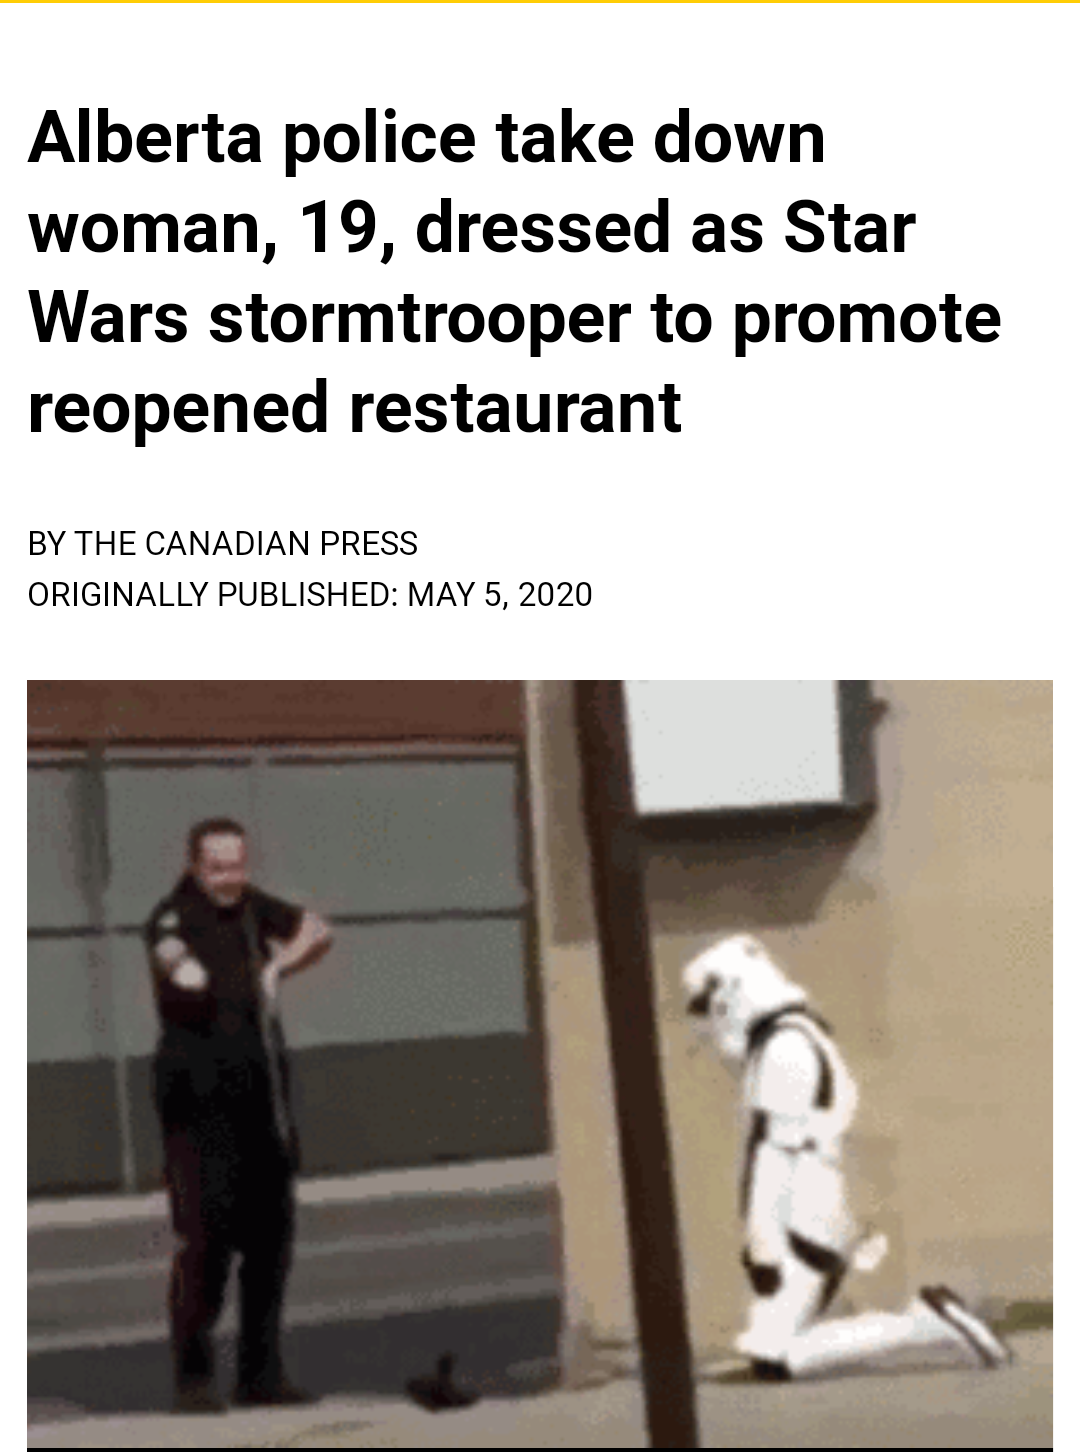 Alberta police do not appreciate harmless cosplay.